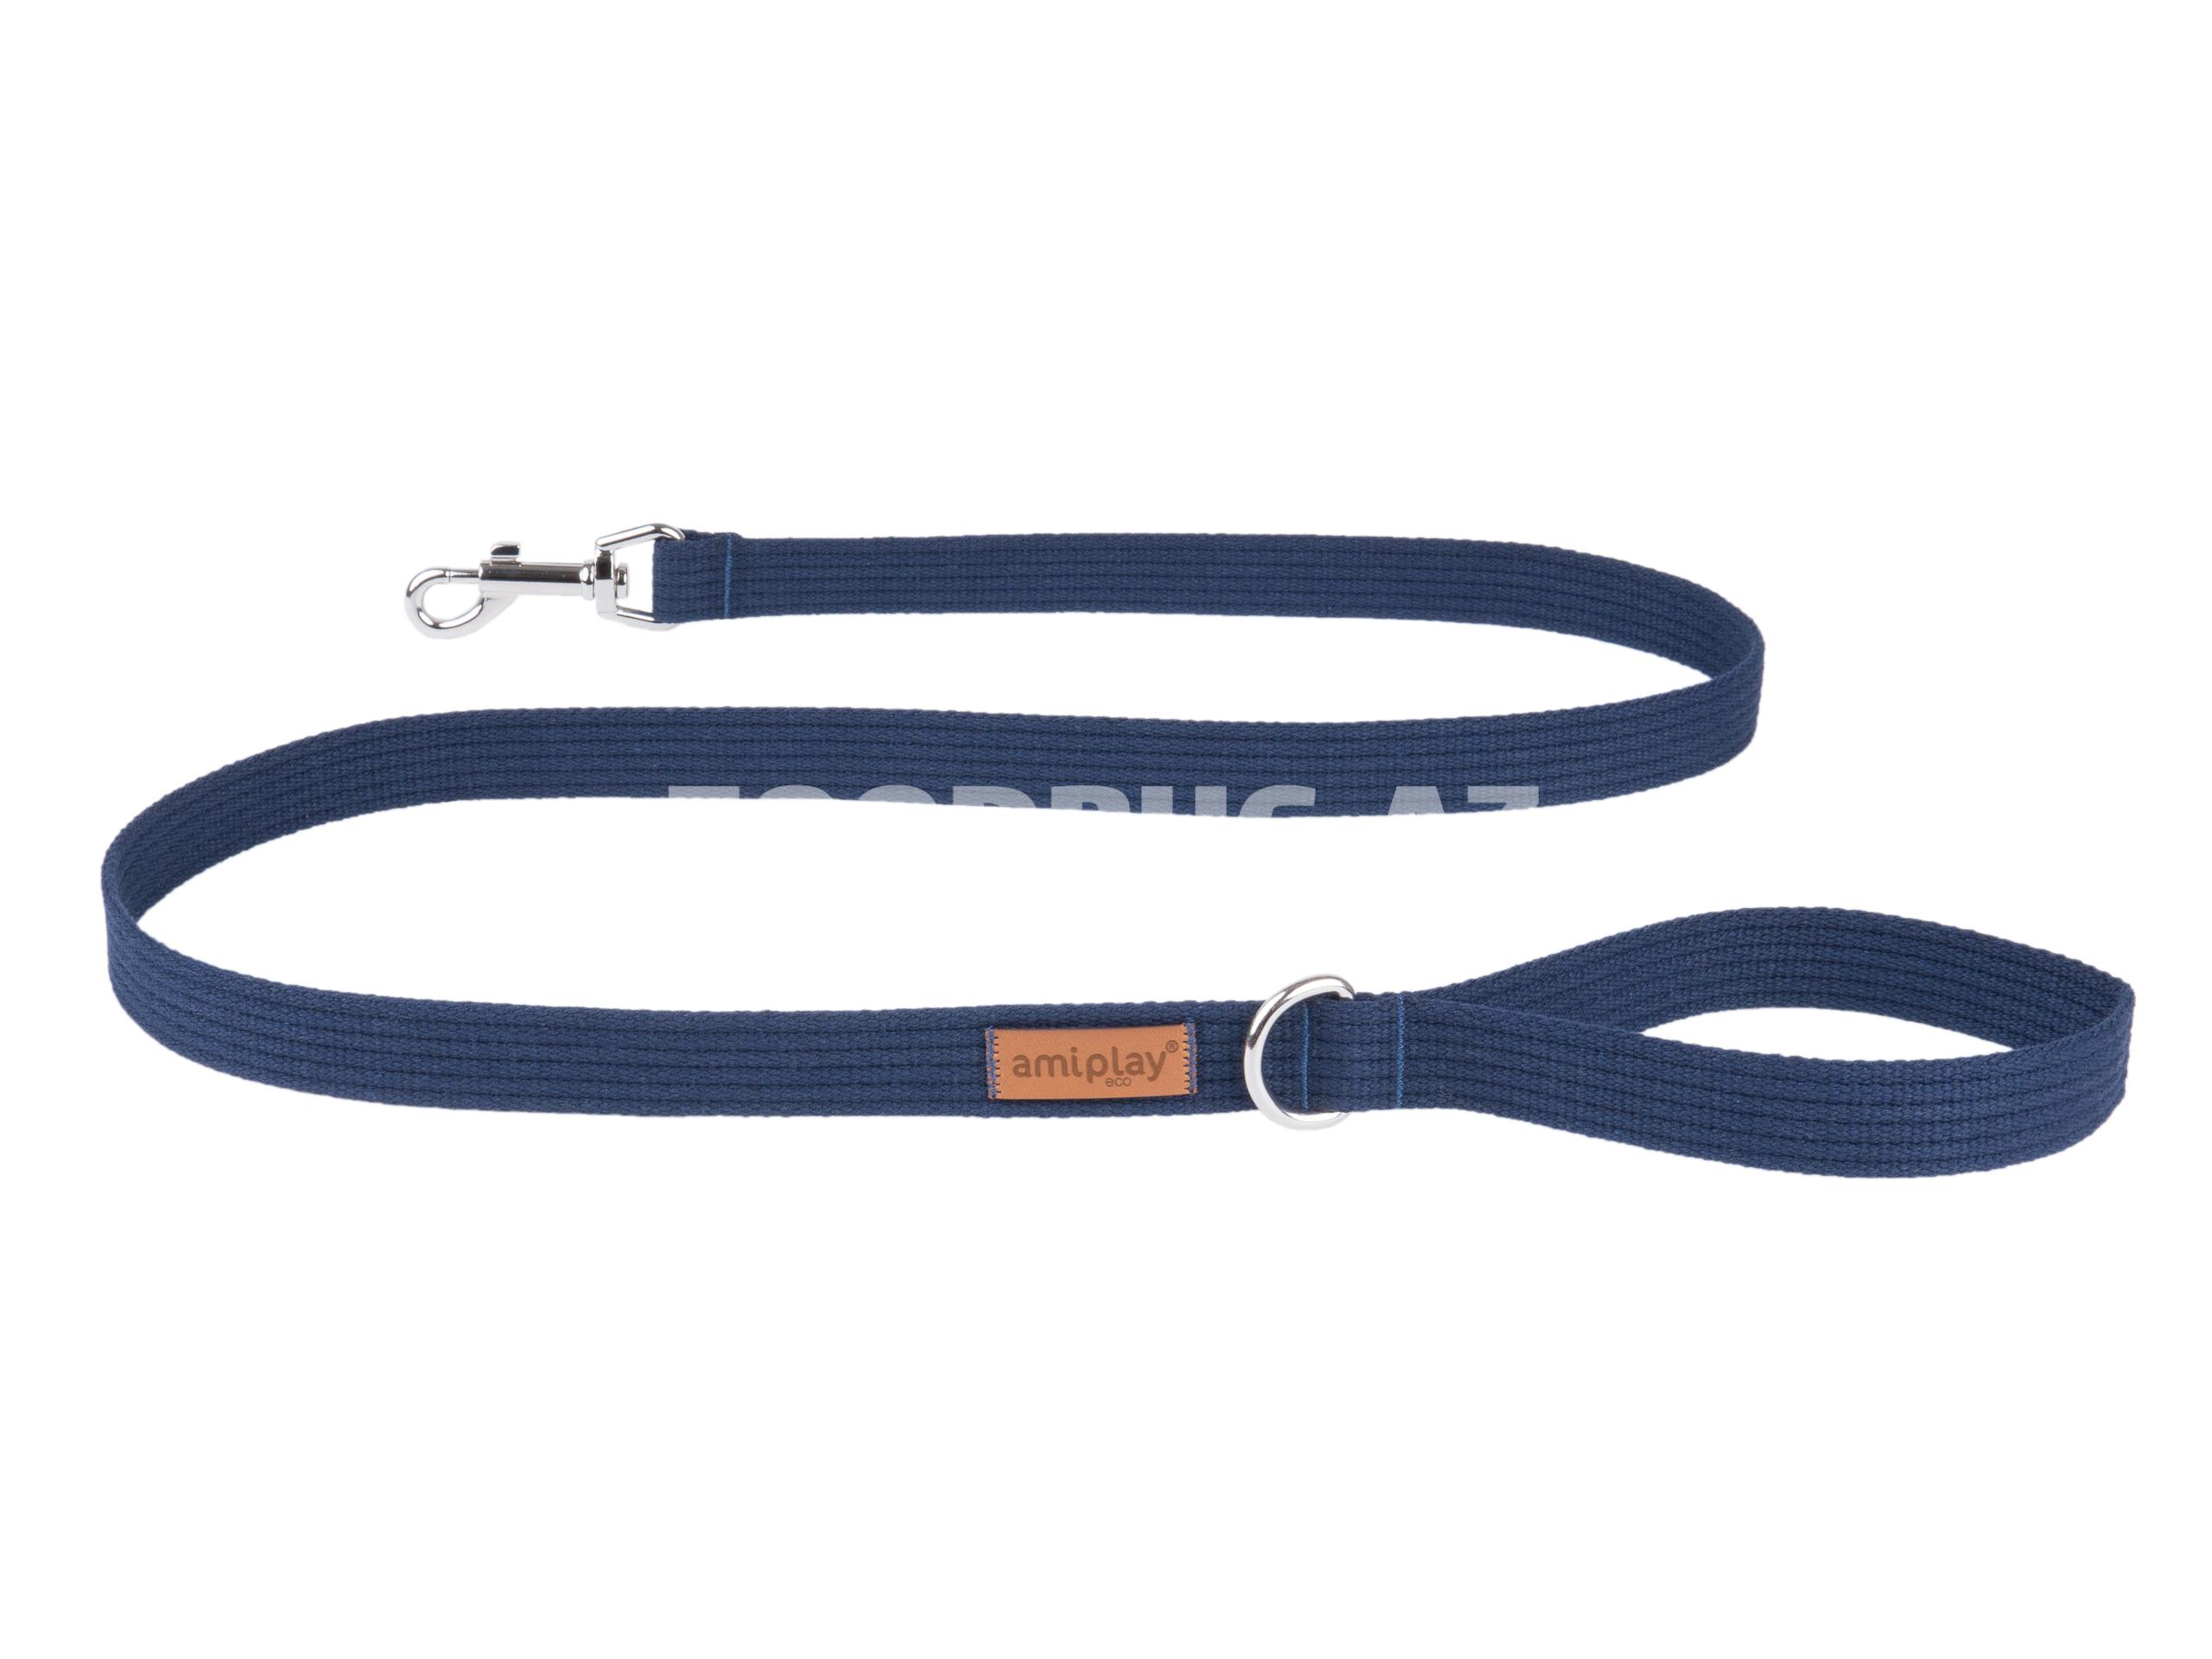 Поводок Amiplay Adjustable Leash. Цвет: Темно-синий. Размер L. Длина: 100-200 см.